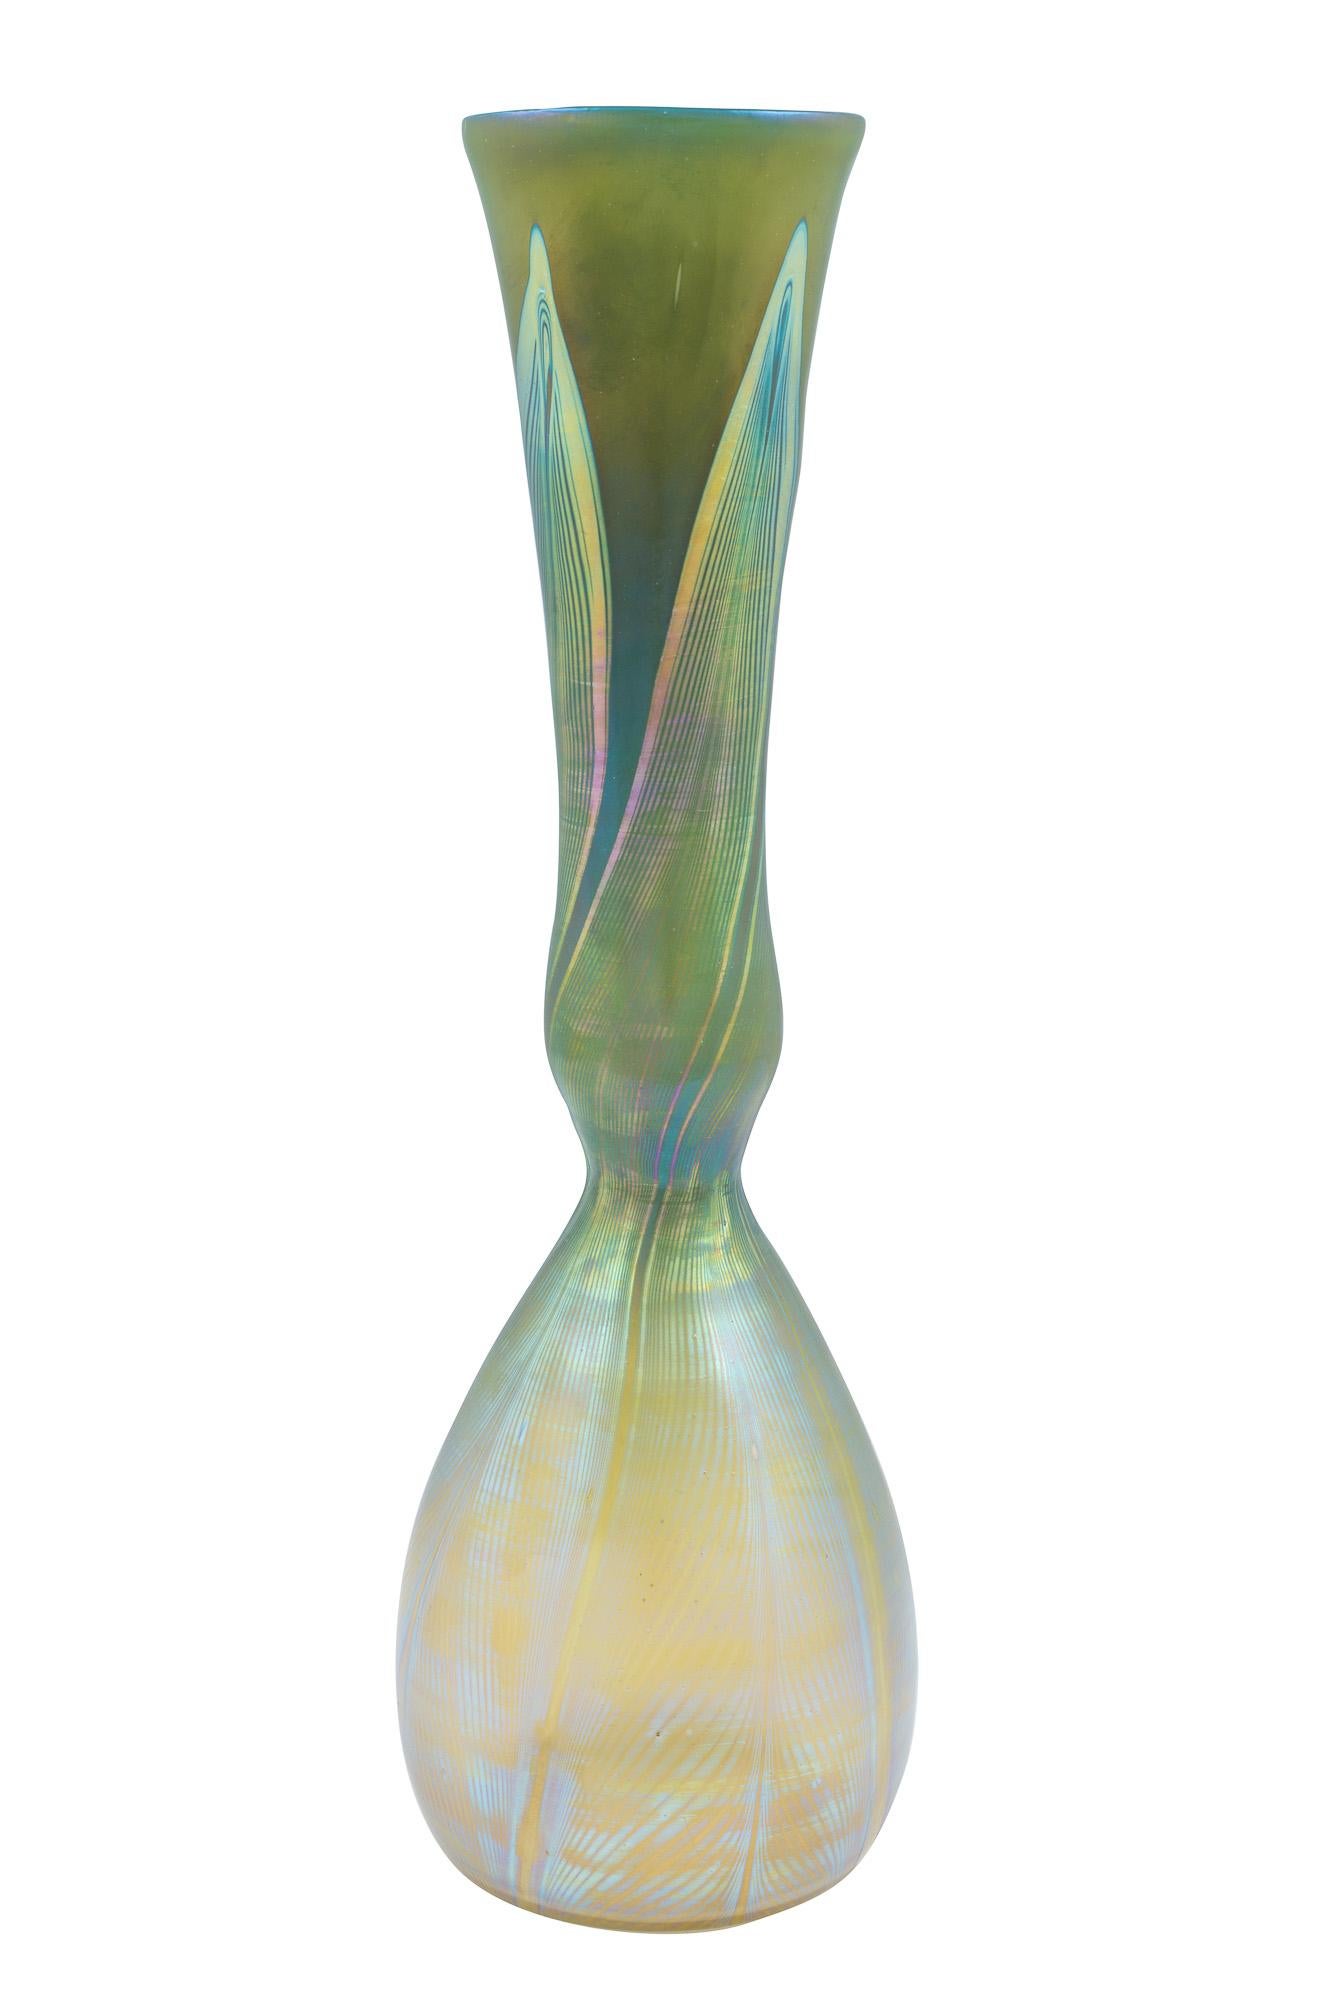 Art Deco Early Signed Loetz Vase circa 1898 Phenomen Gre 166 Russian Green